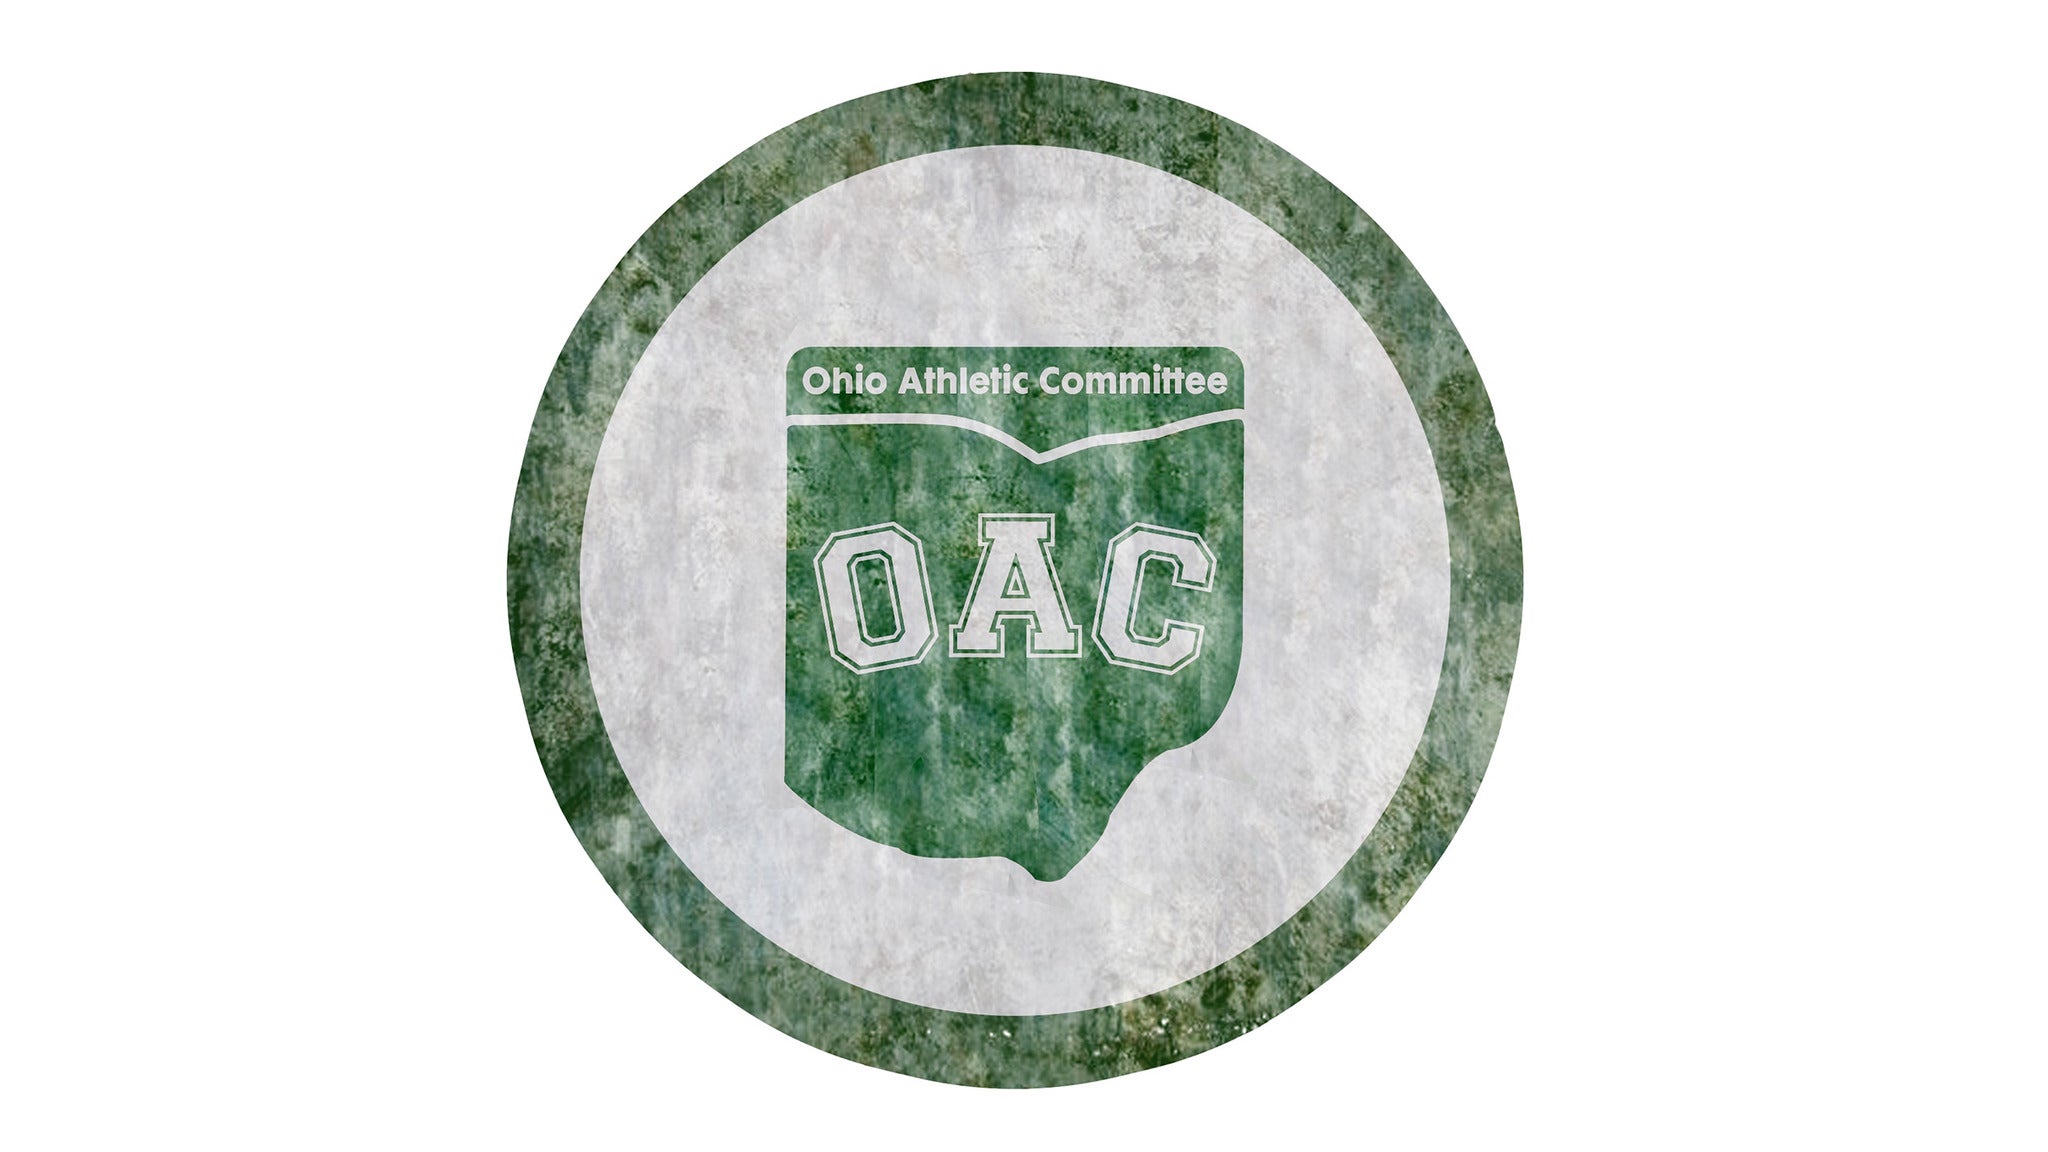 Ohio Athletic Committee Wrestling